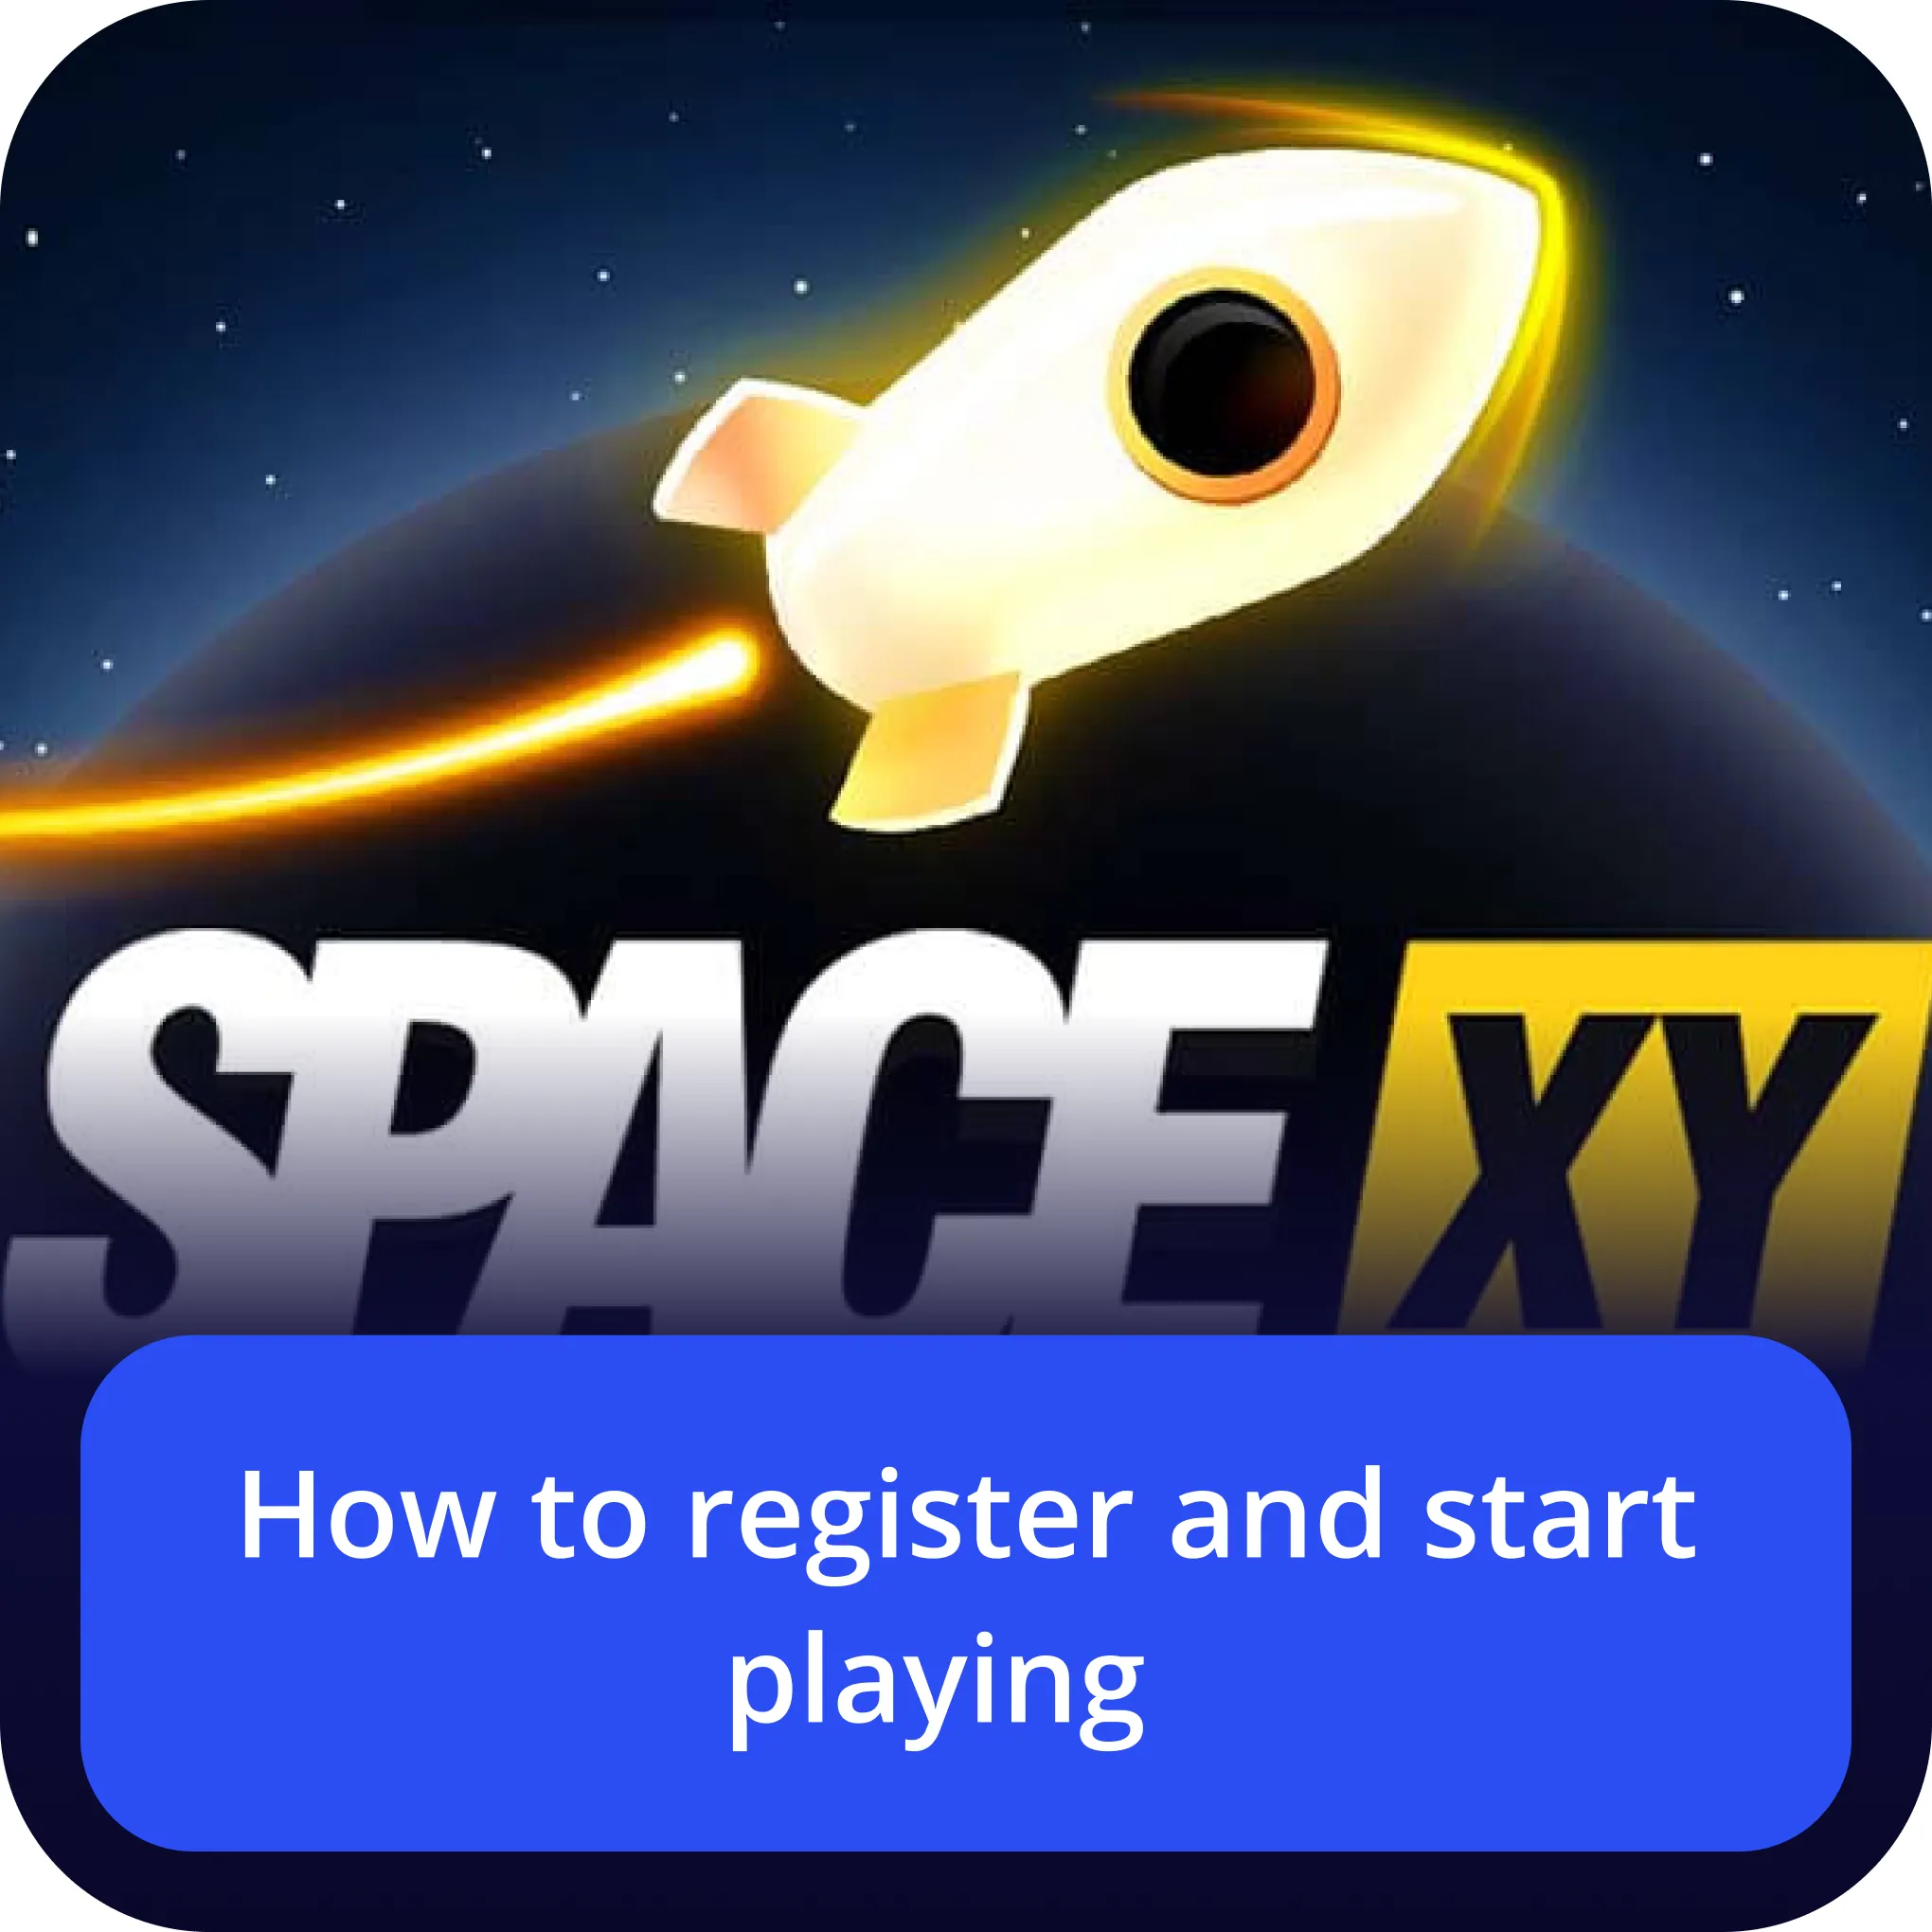 start playing space xy